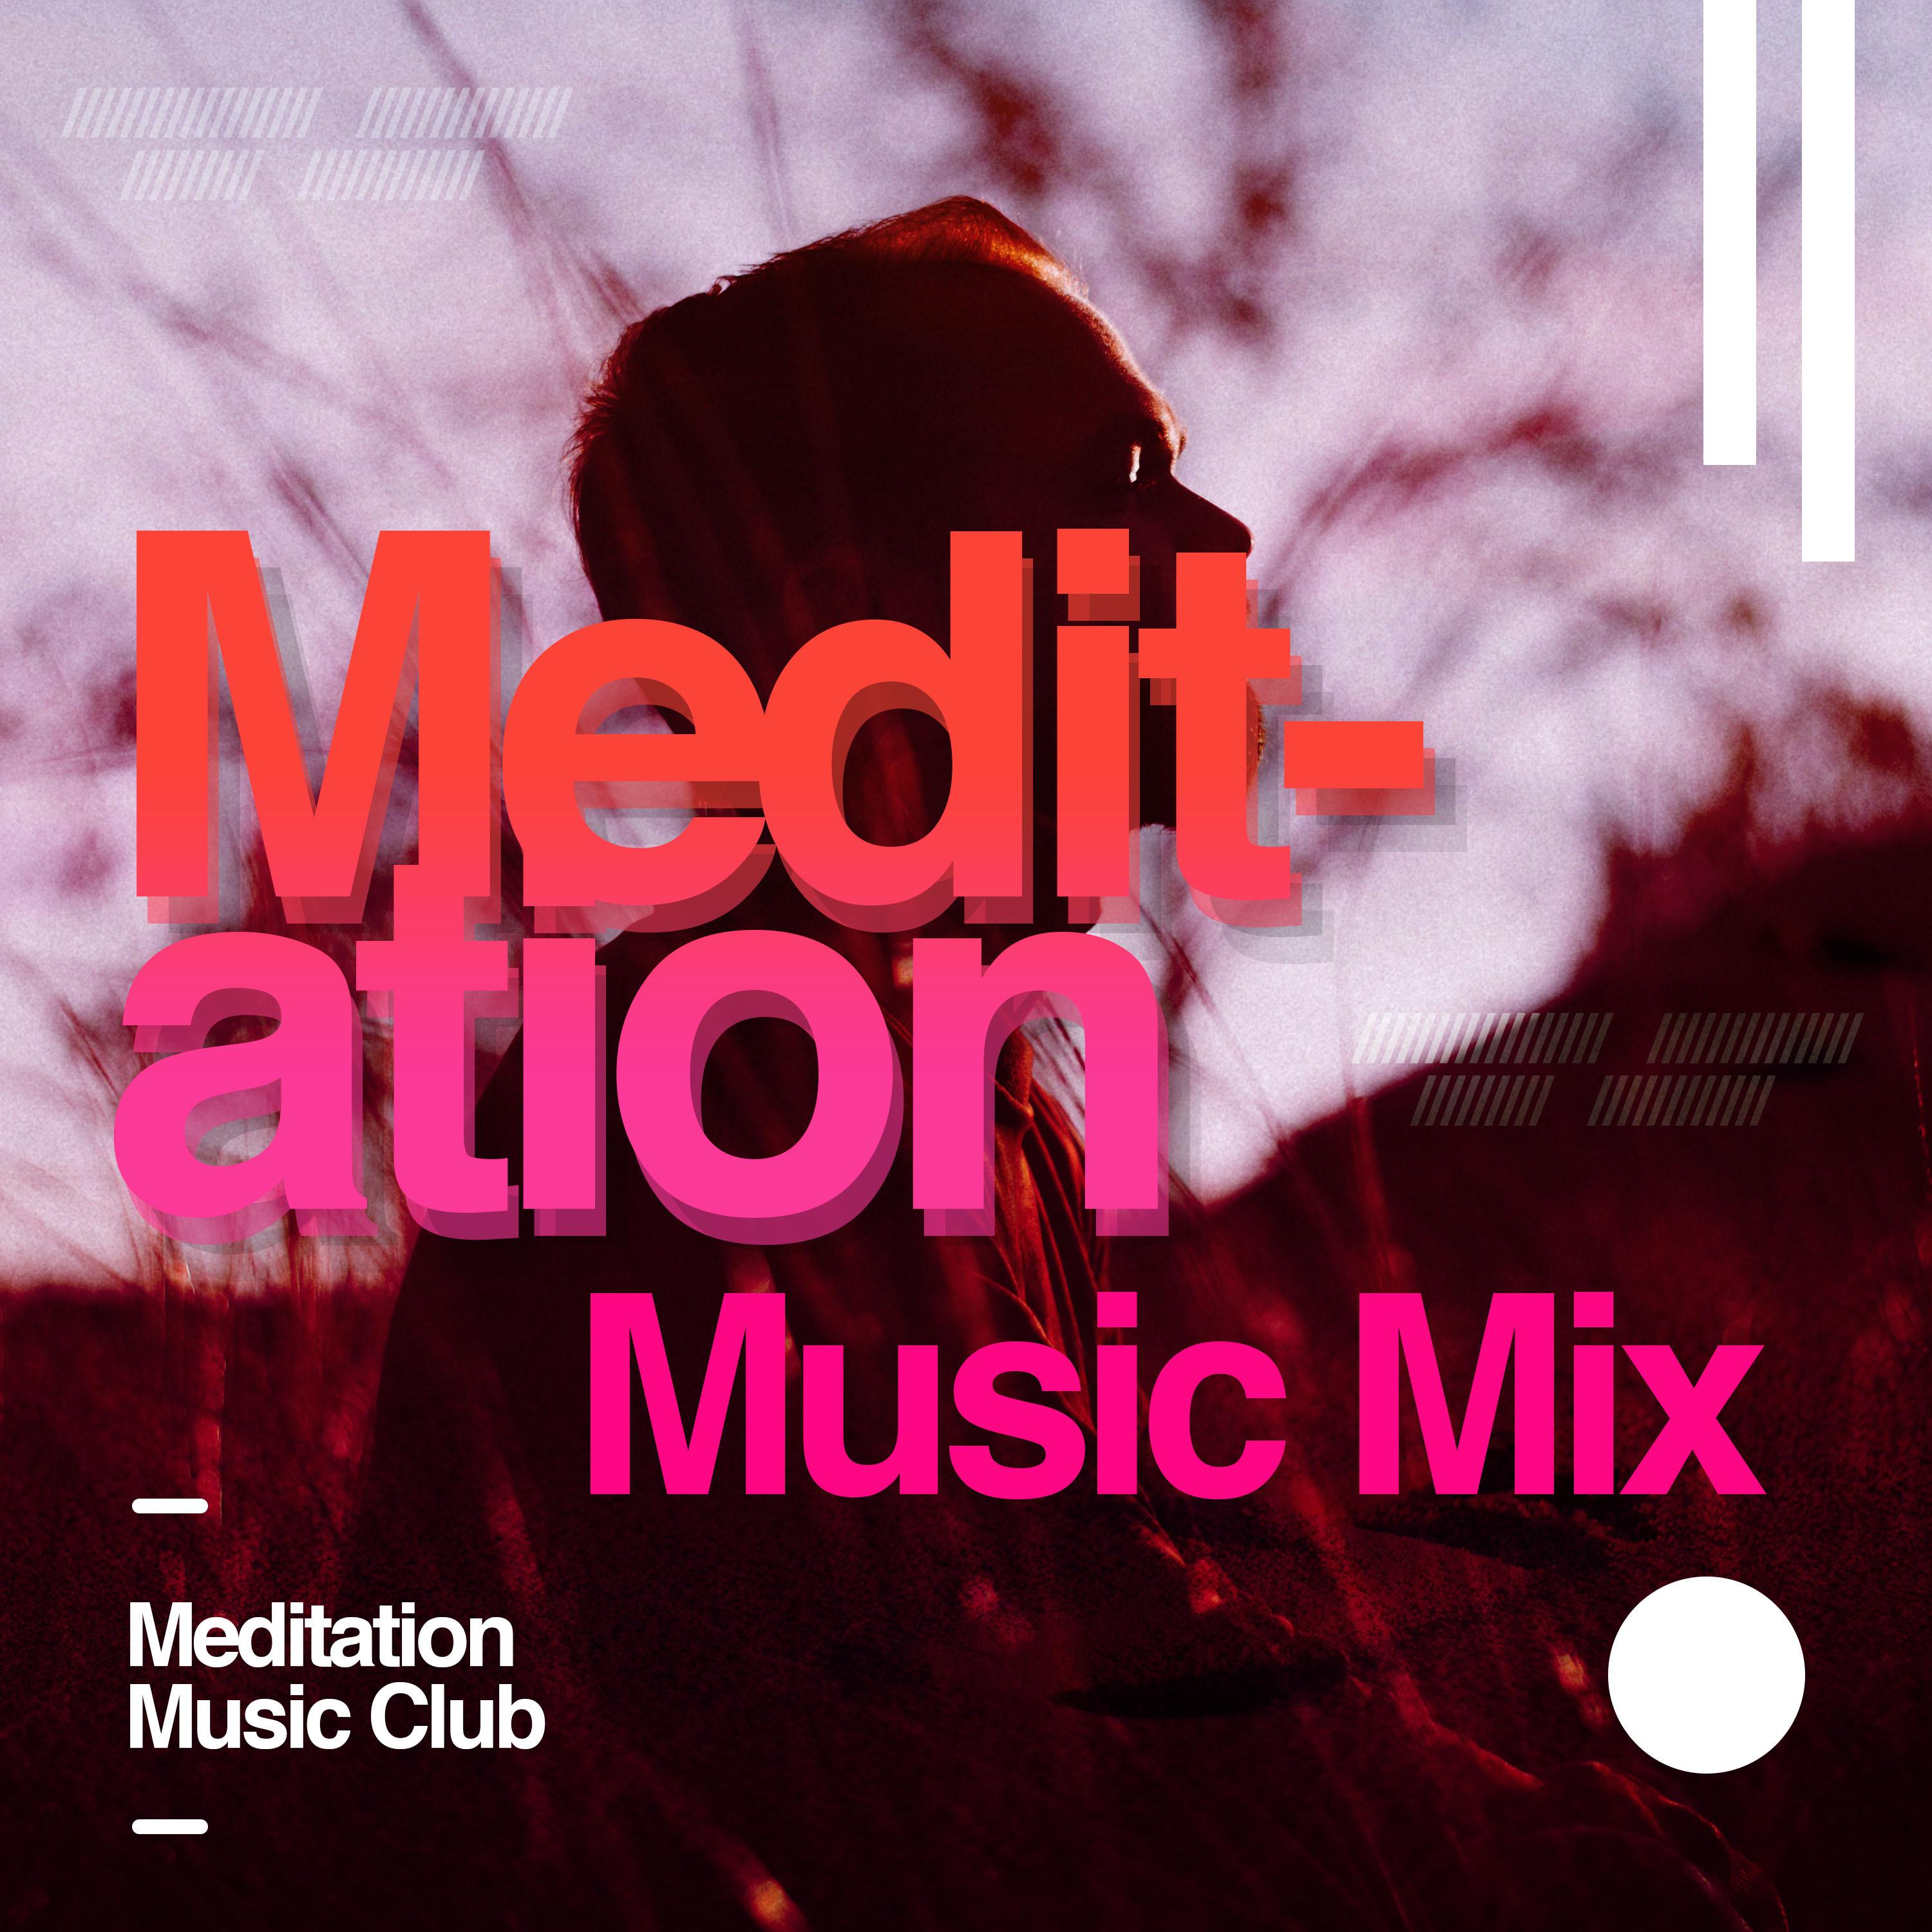 Meditation Music Mix